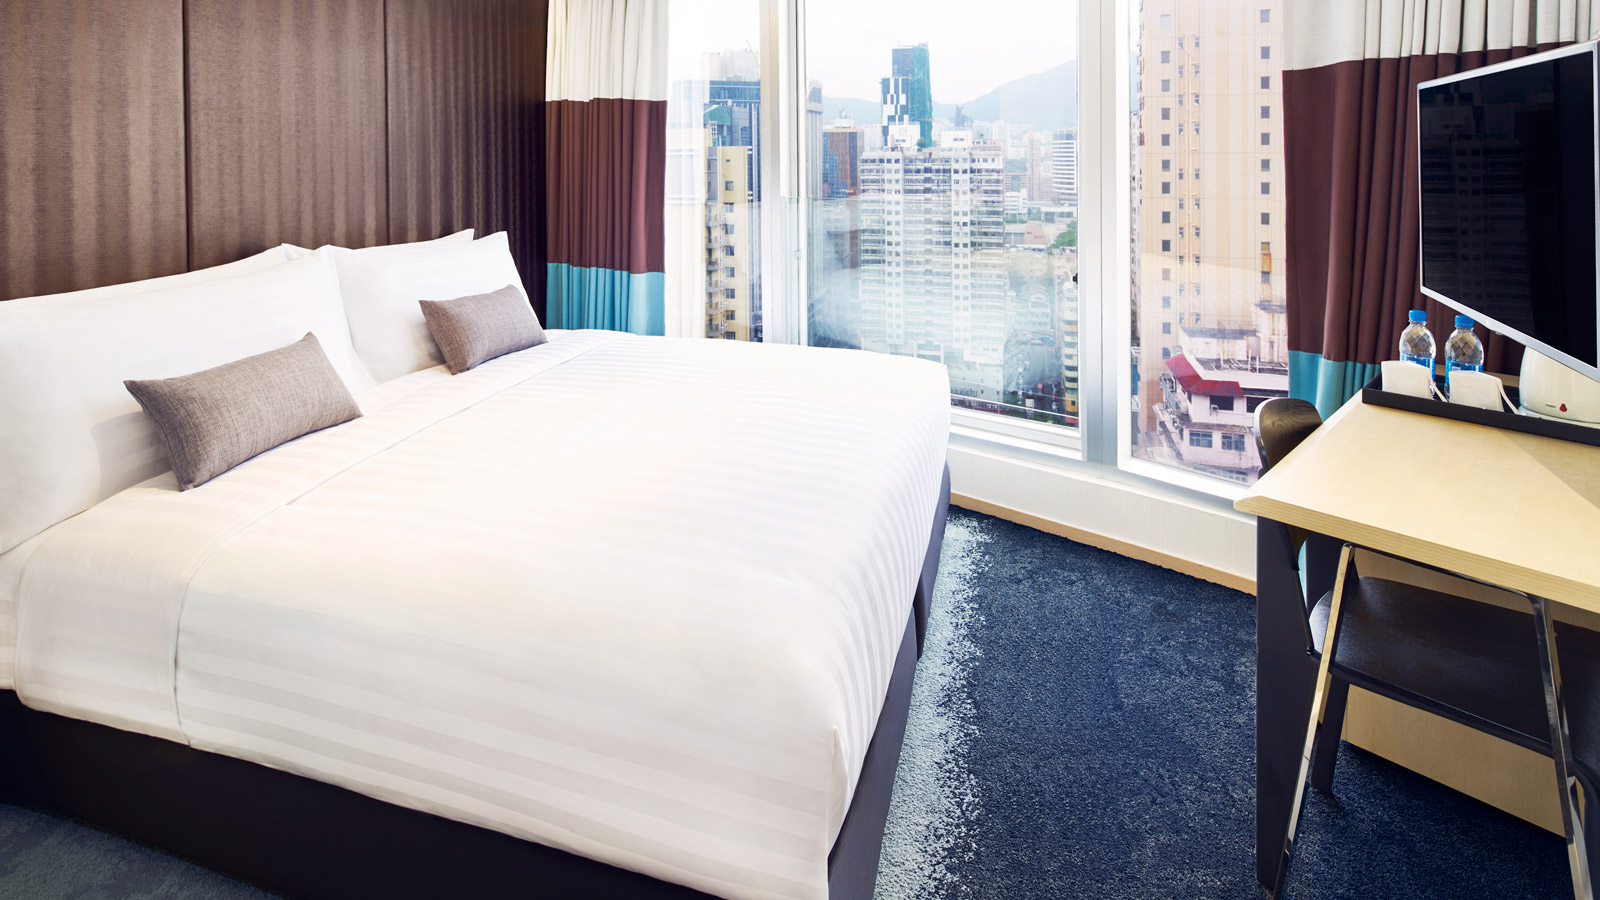 Classic - Hotel 108, Hong Kong - 호텔 108, 홍콩